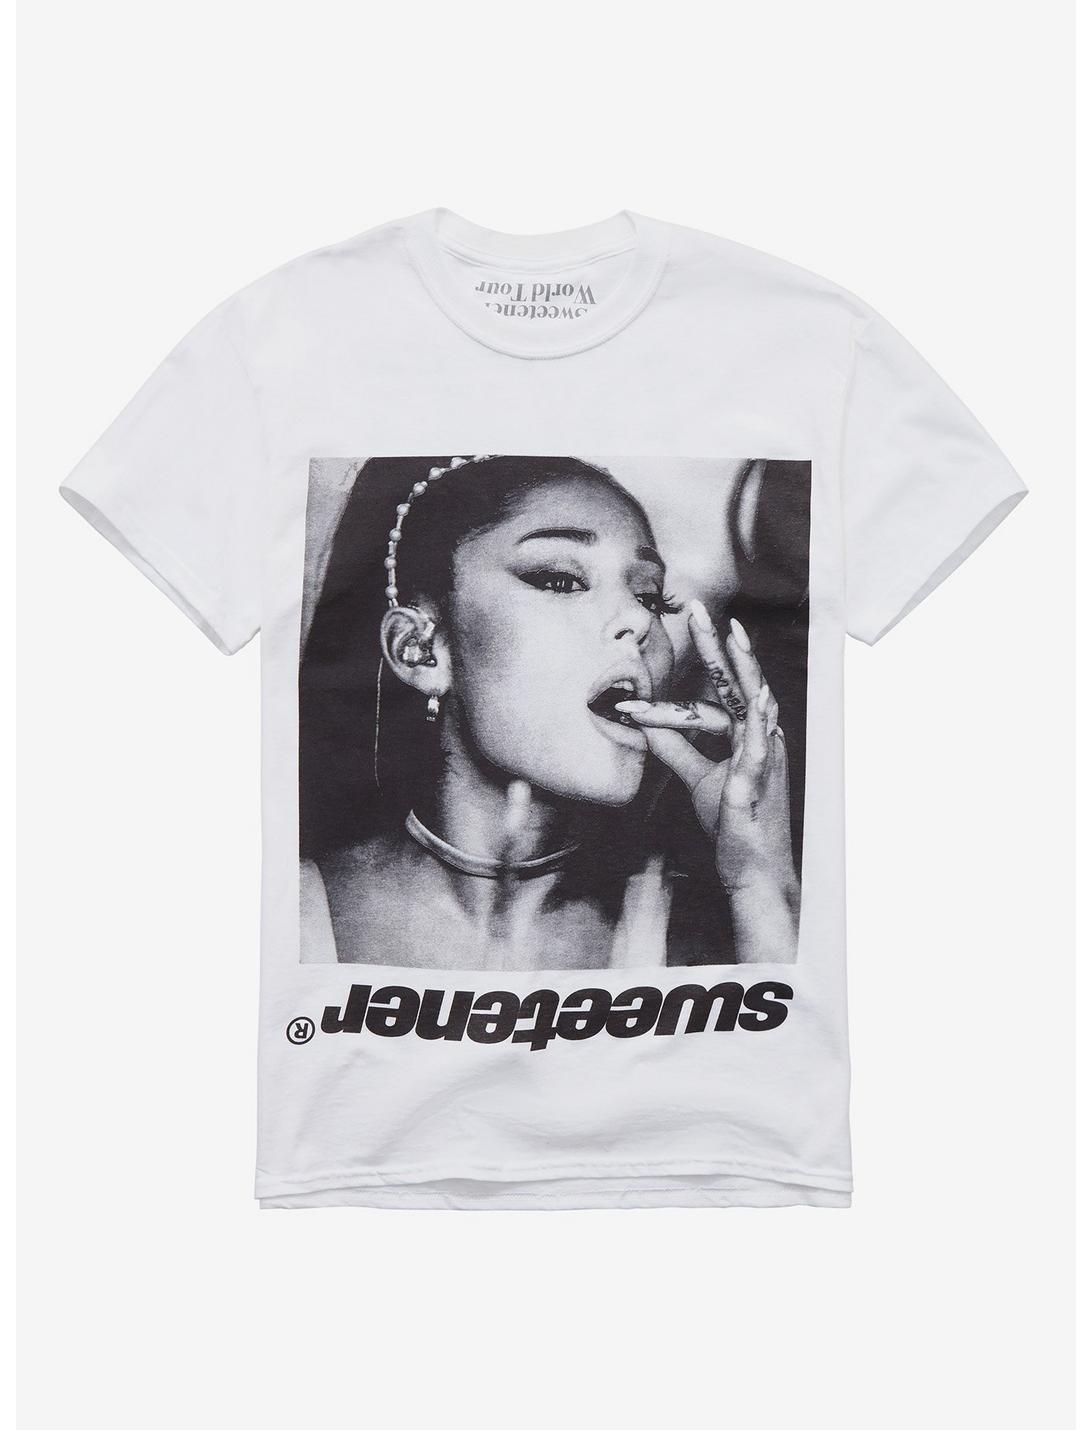 Ariana Grande shirt